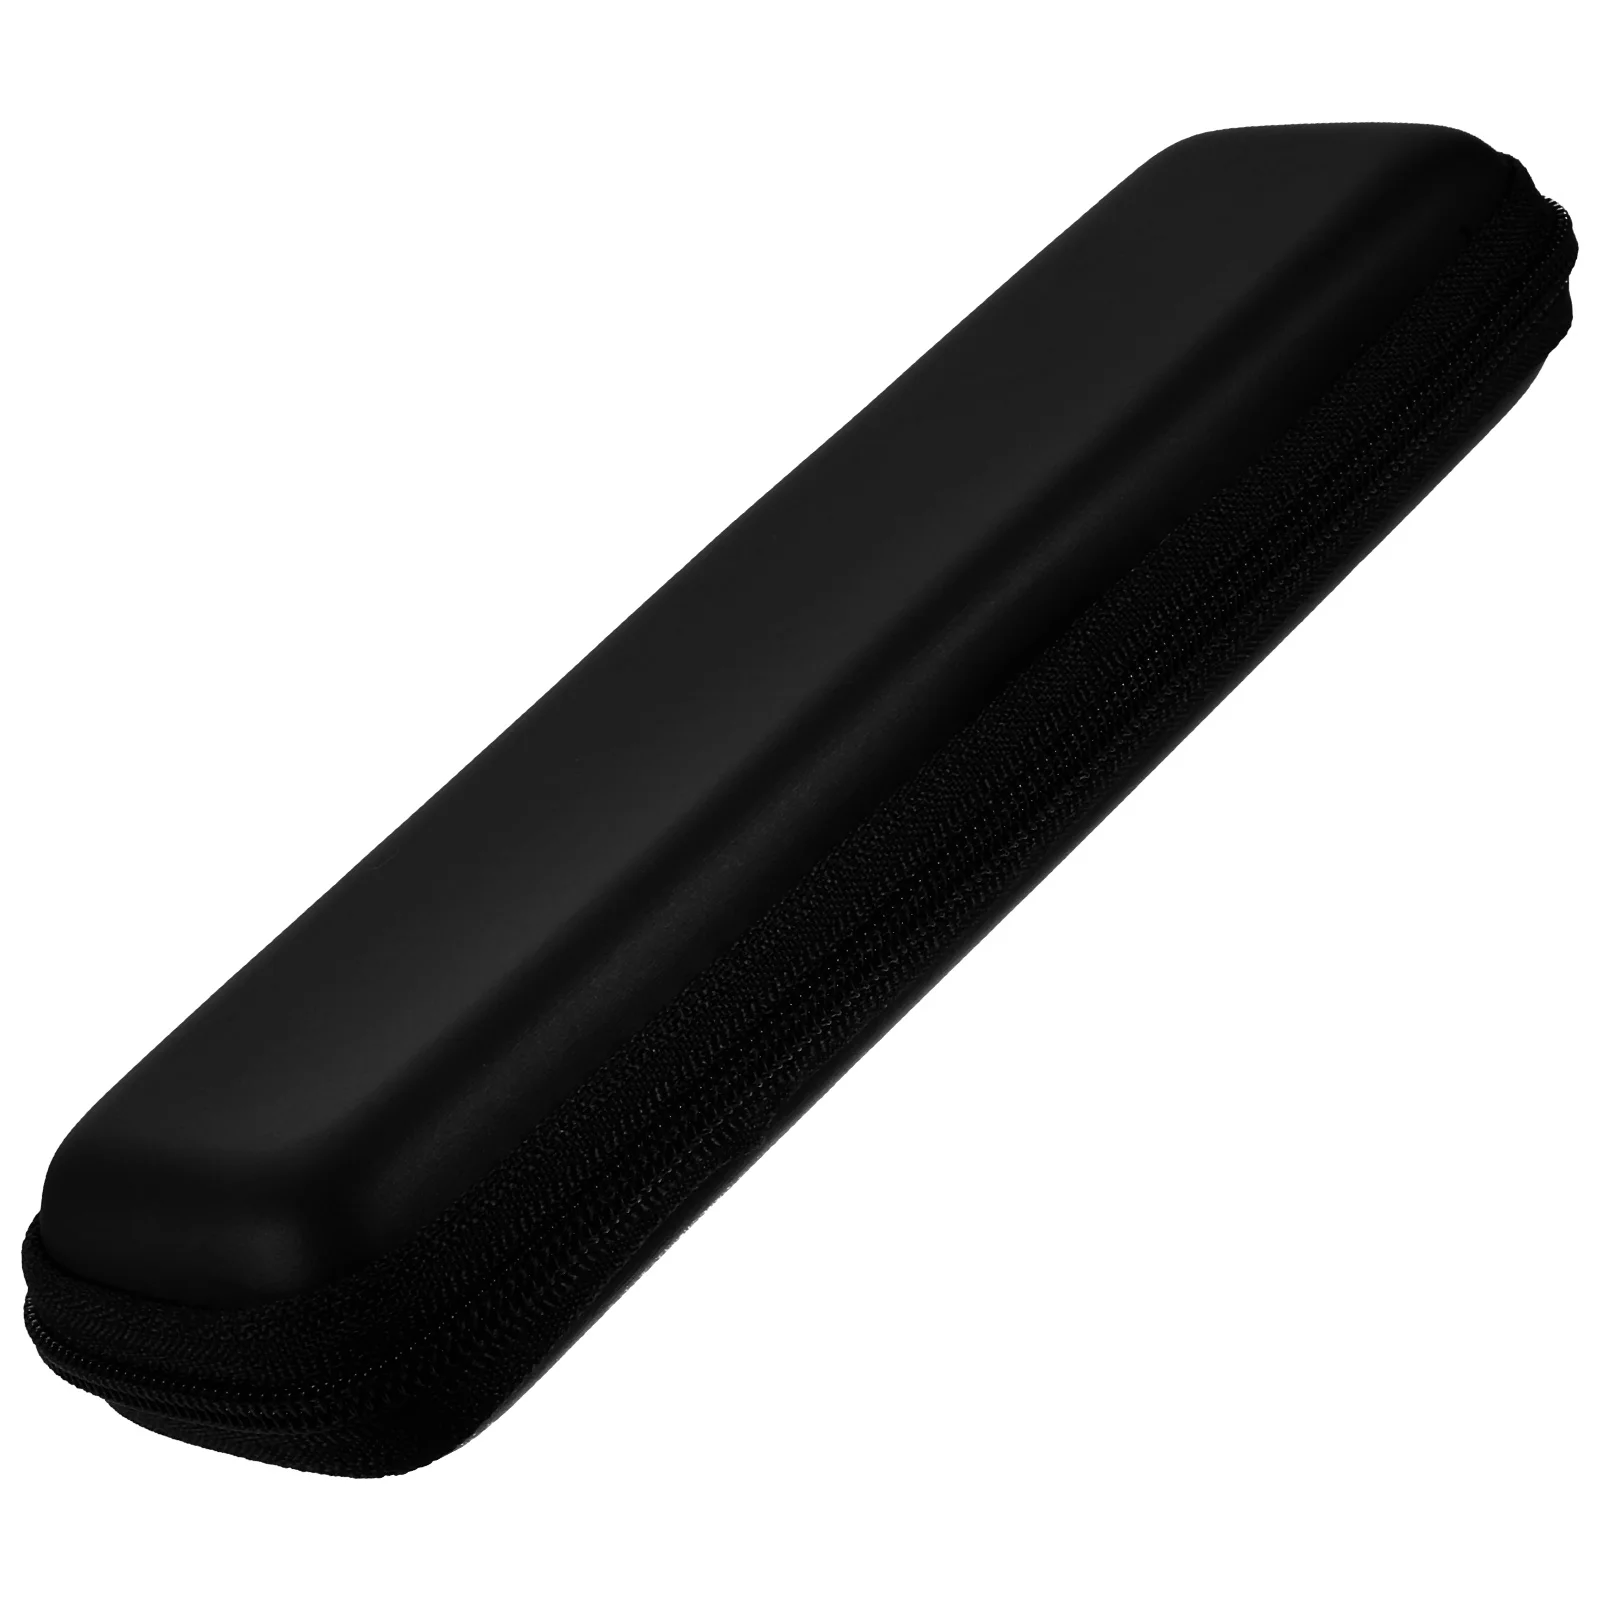 

2pcs Black Hard Case EVA Hard Shell Pen Case Holder for Executive Fountain Pen and Stylus Touch Pen